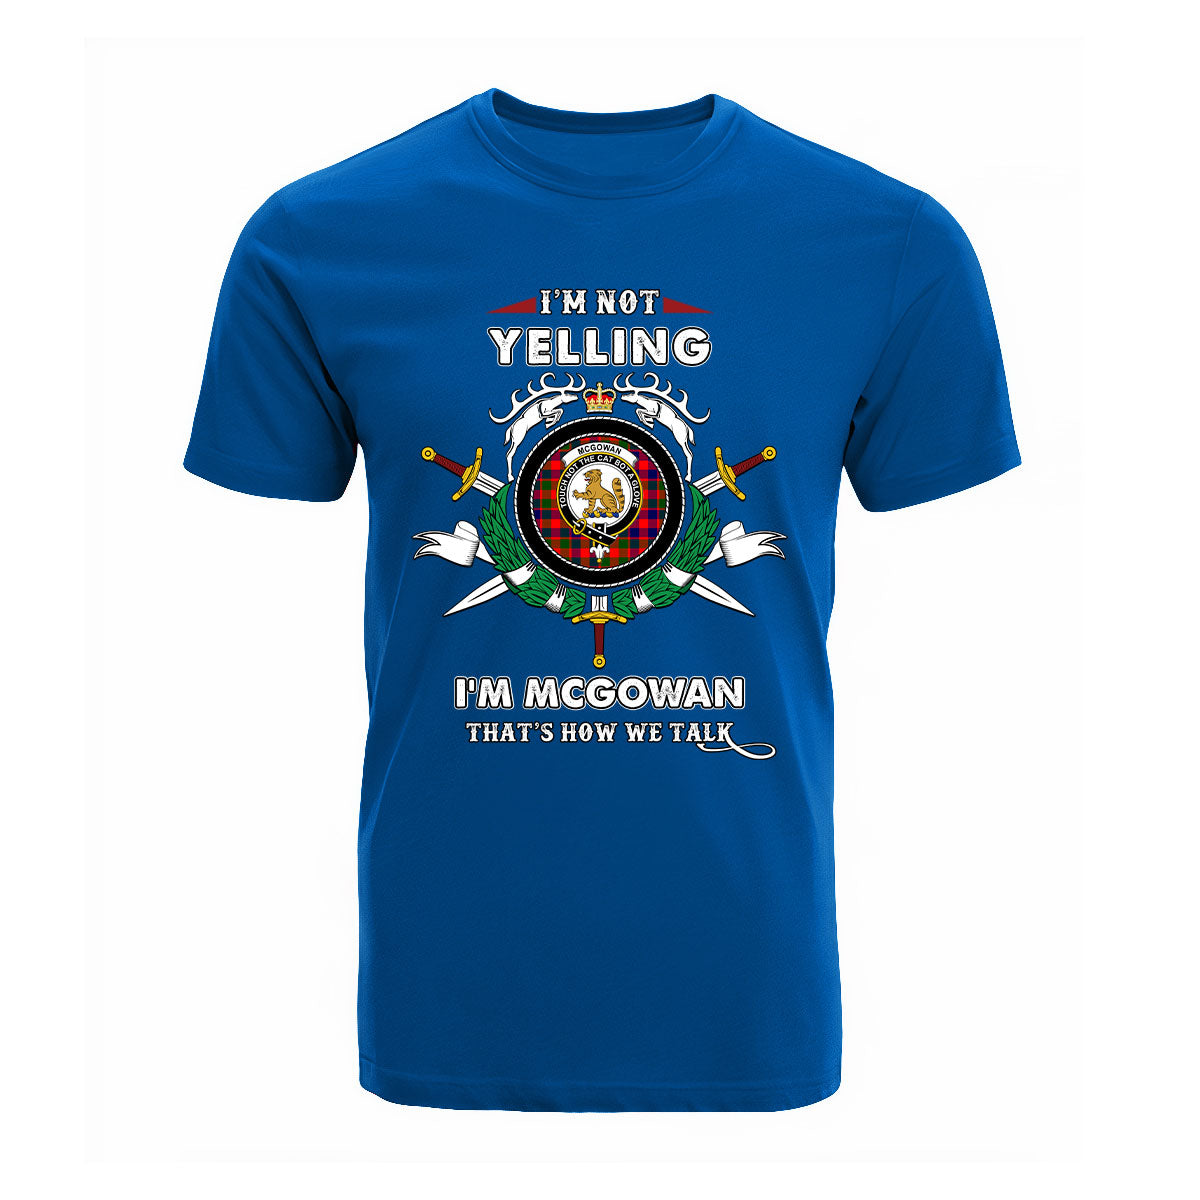 McGowan Tartan Crest T-shirt - I'm not yelling style